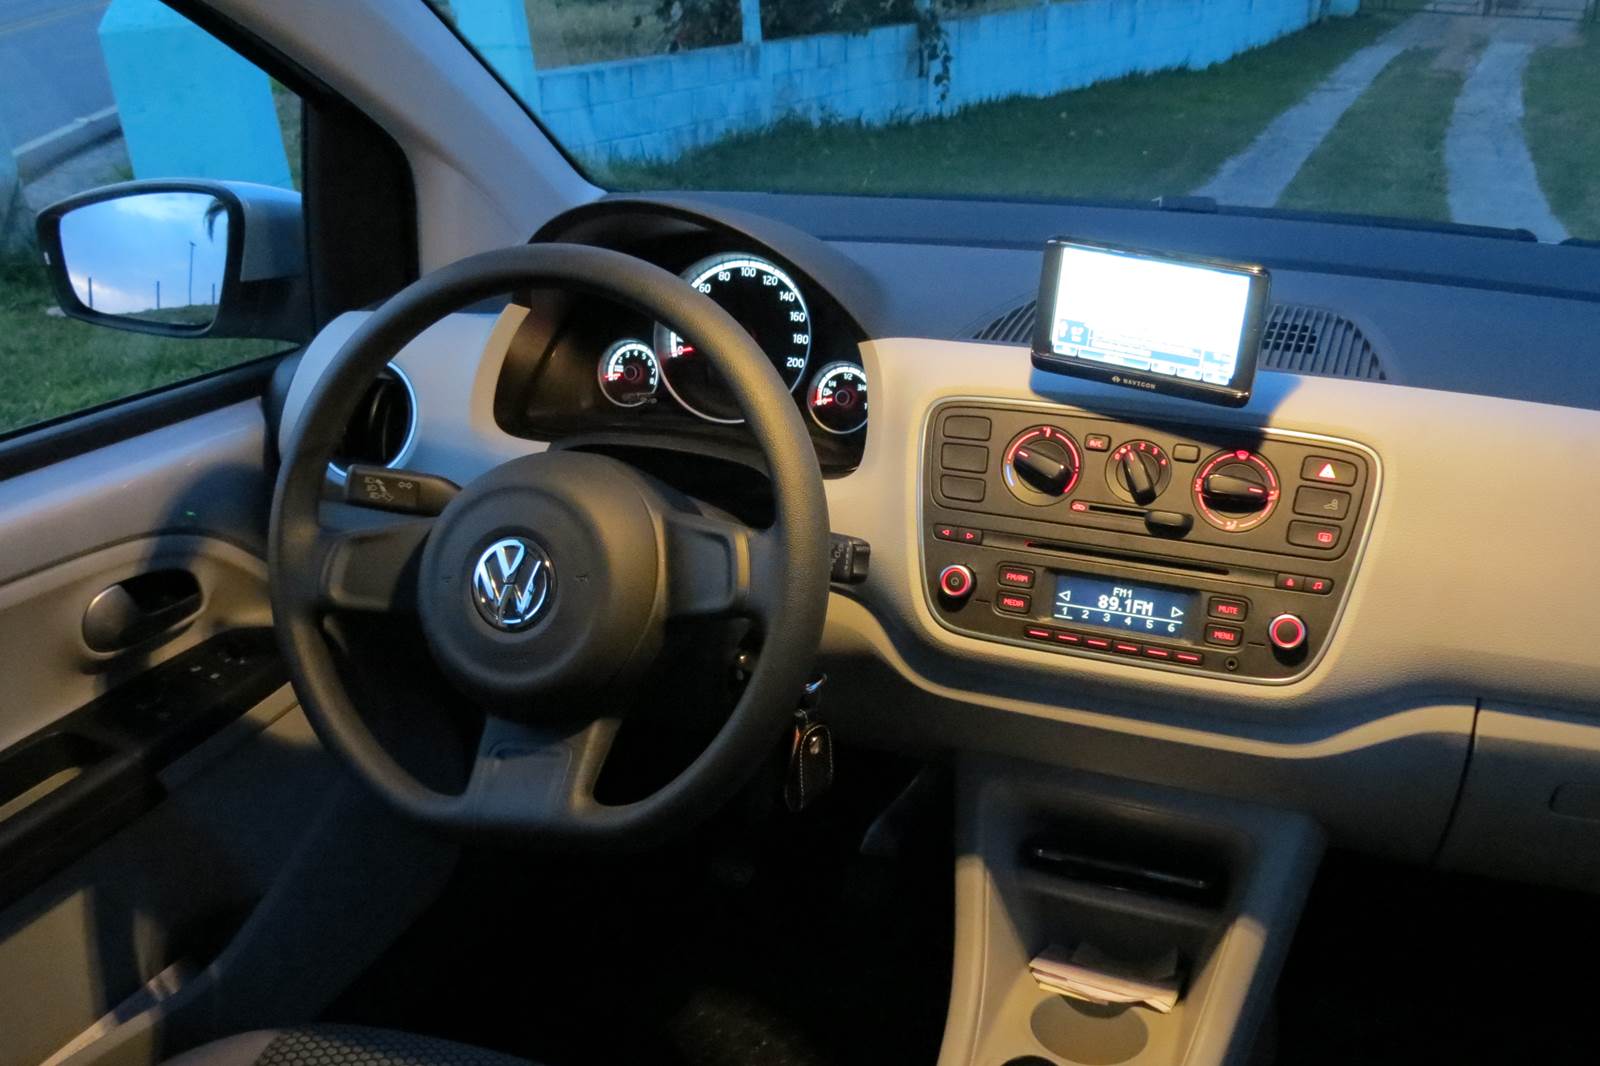 novo Fiat Uno 2015 x Volkswagen up!